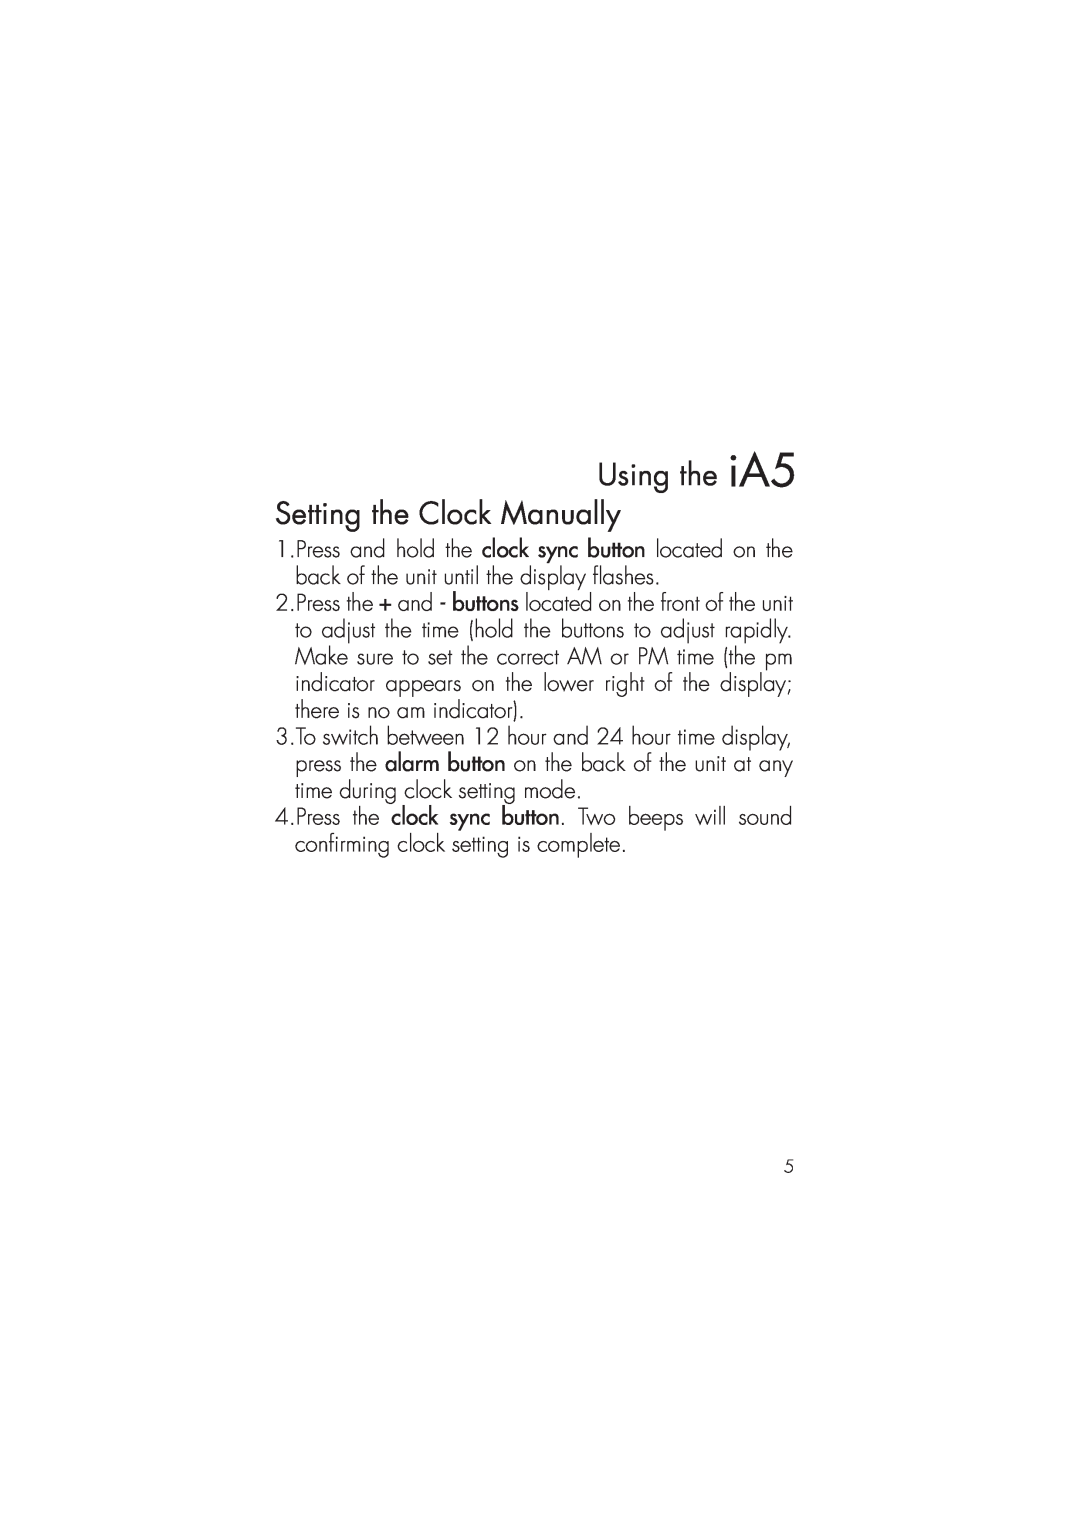 iHome ia5 instruction manual Using the iA5 Setting the Clock Manually 